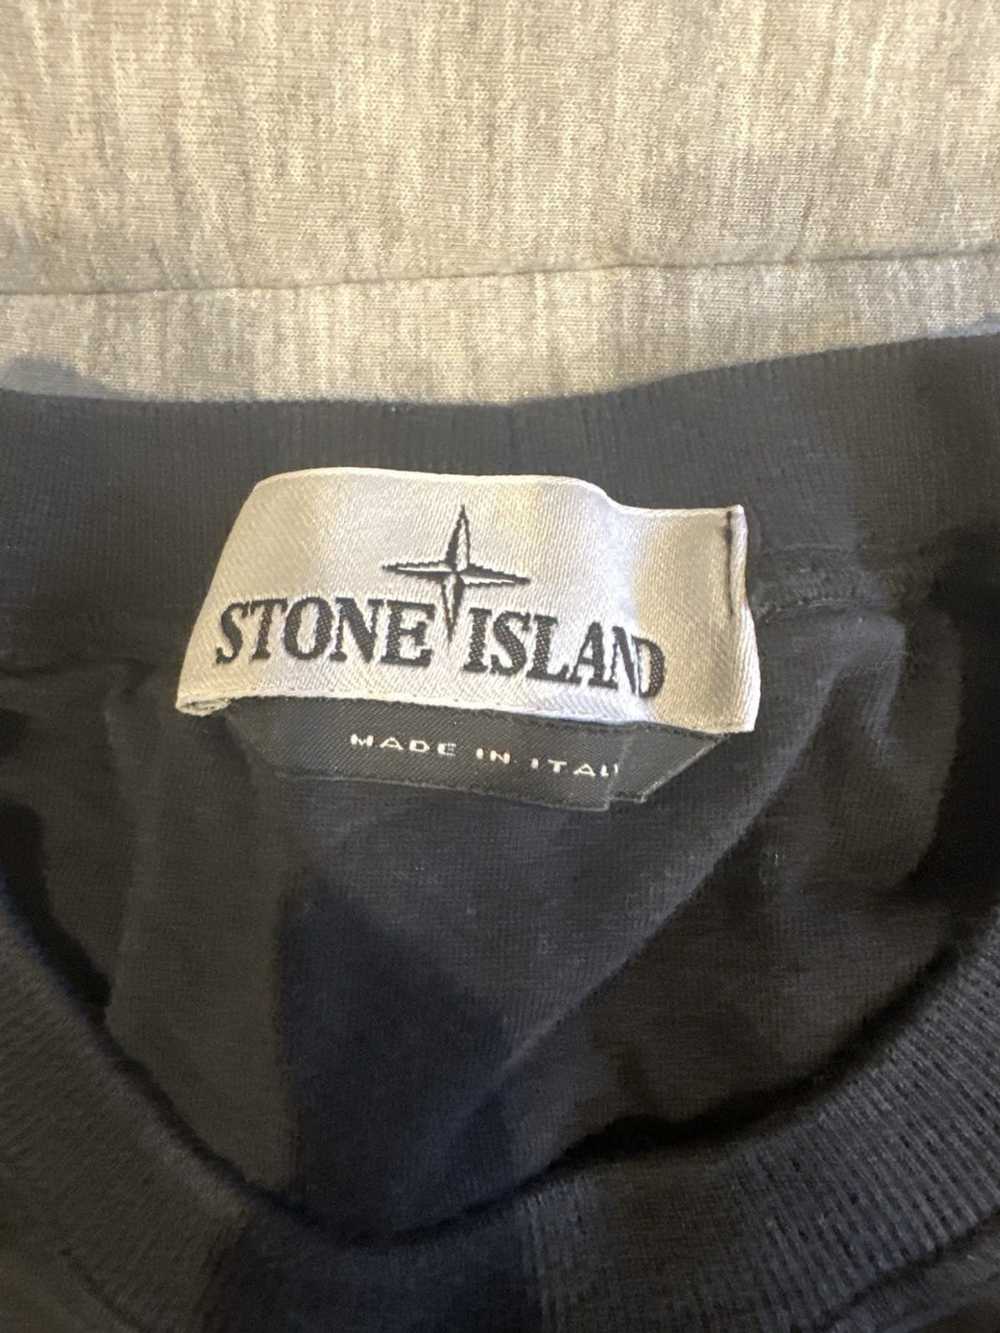 Stone Island Stone Island Long Sleeve logo Tee - image 5